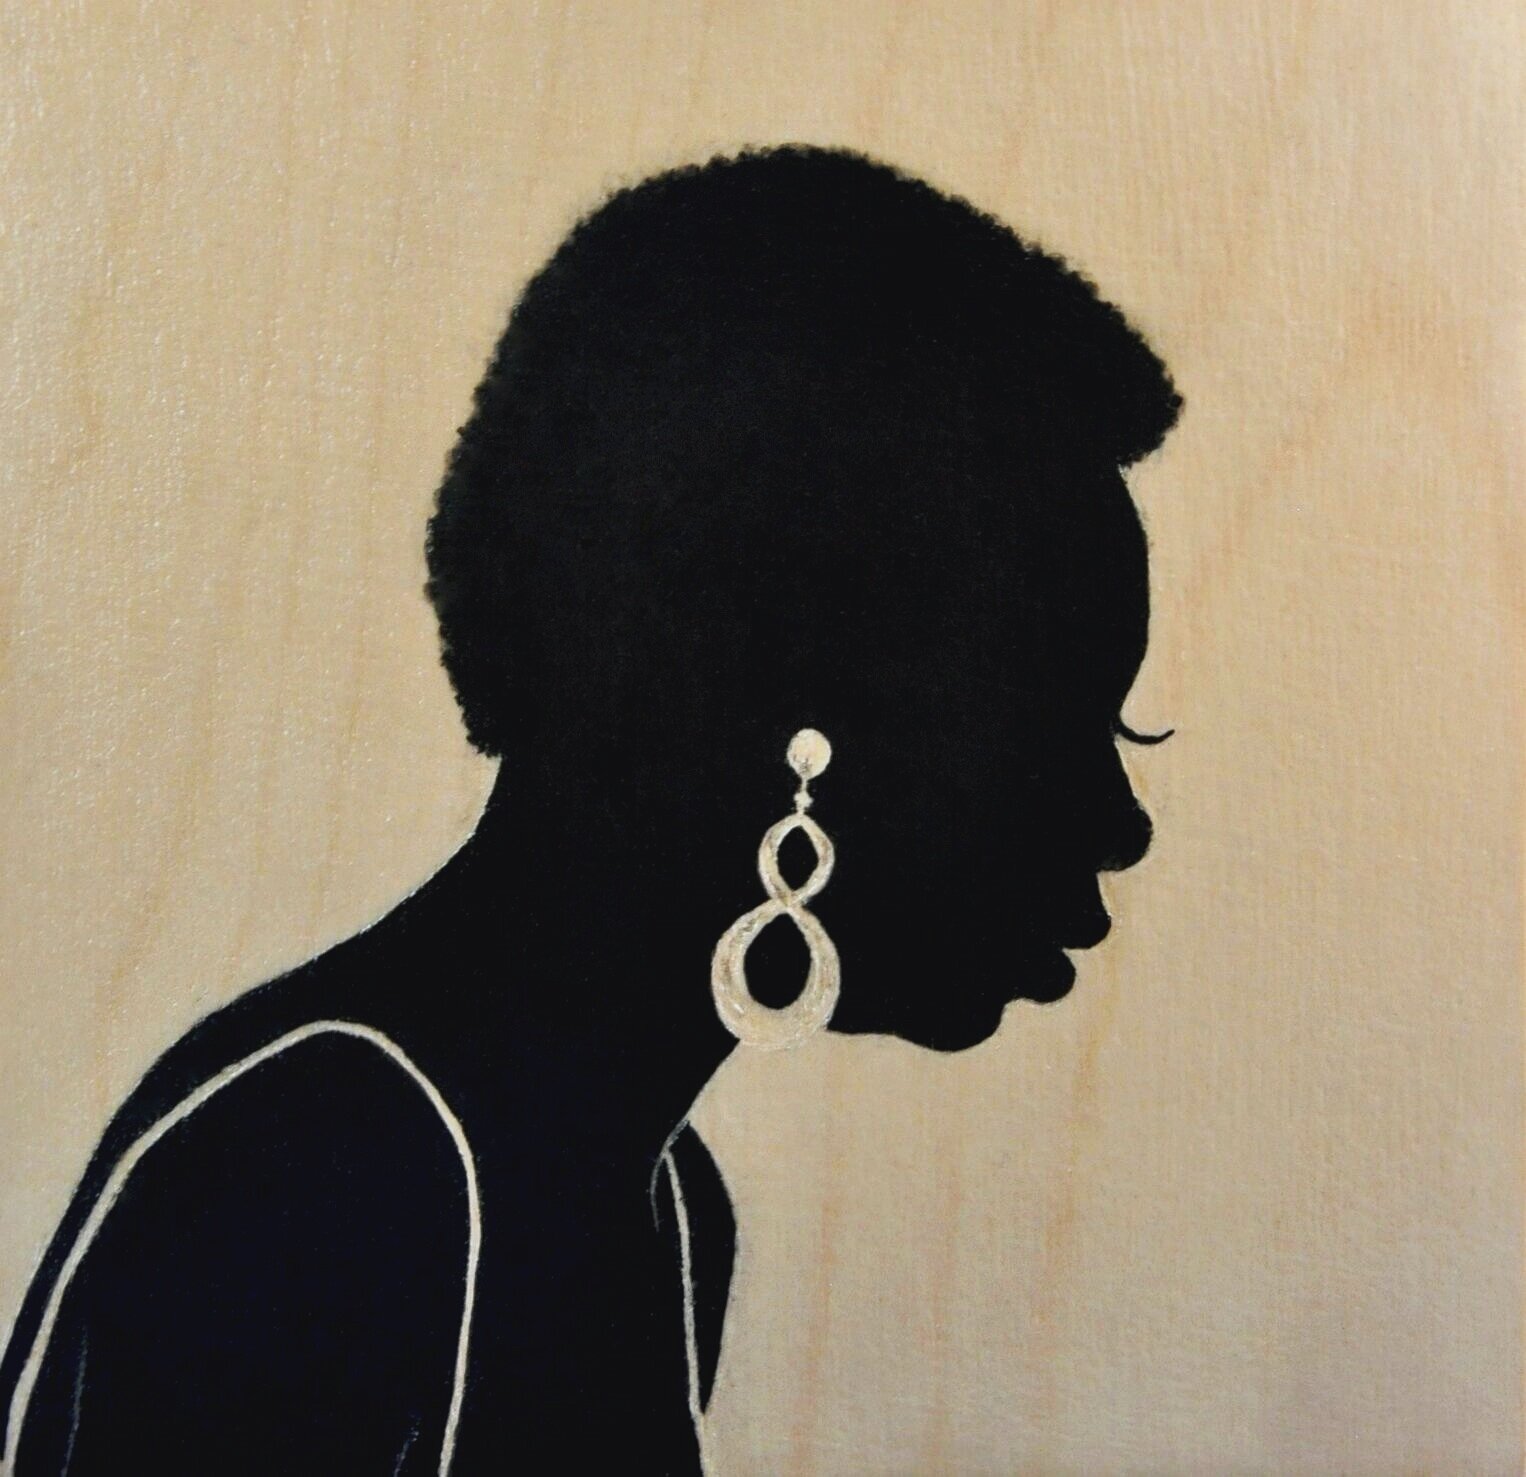 Nina Simone, Singer